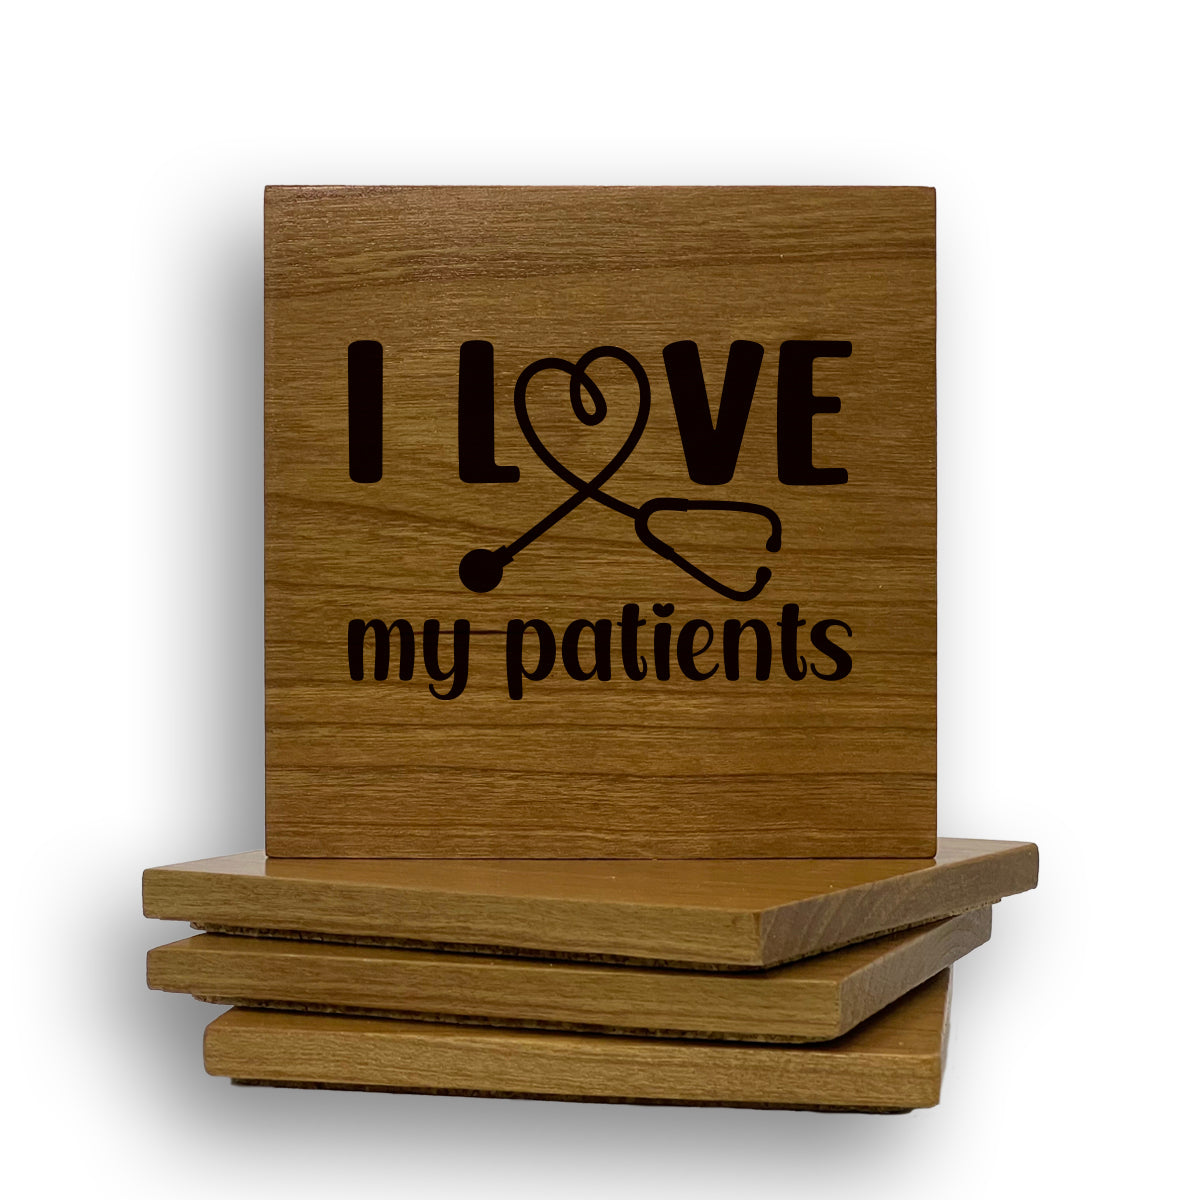 Love Patients Coaster